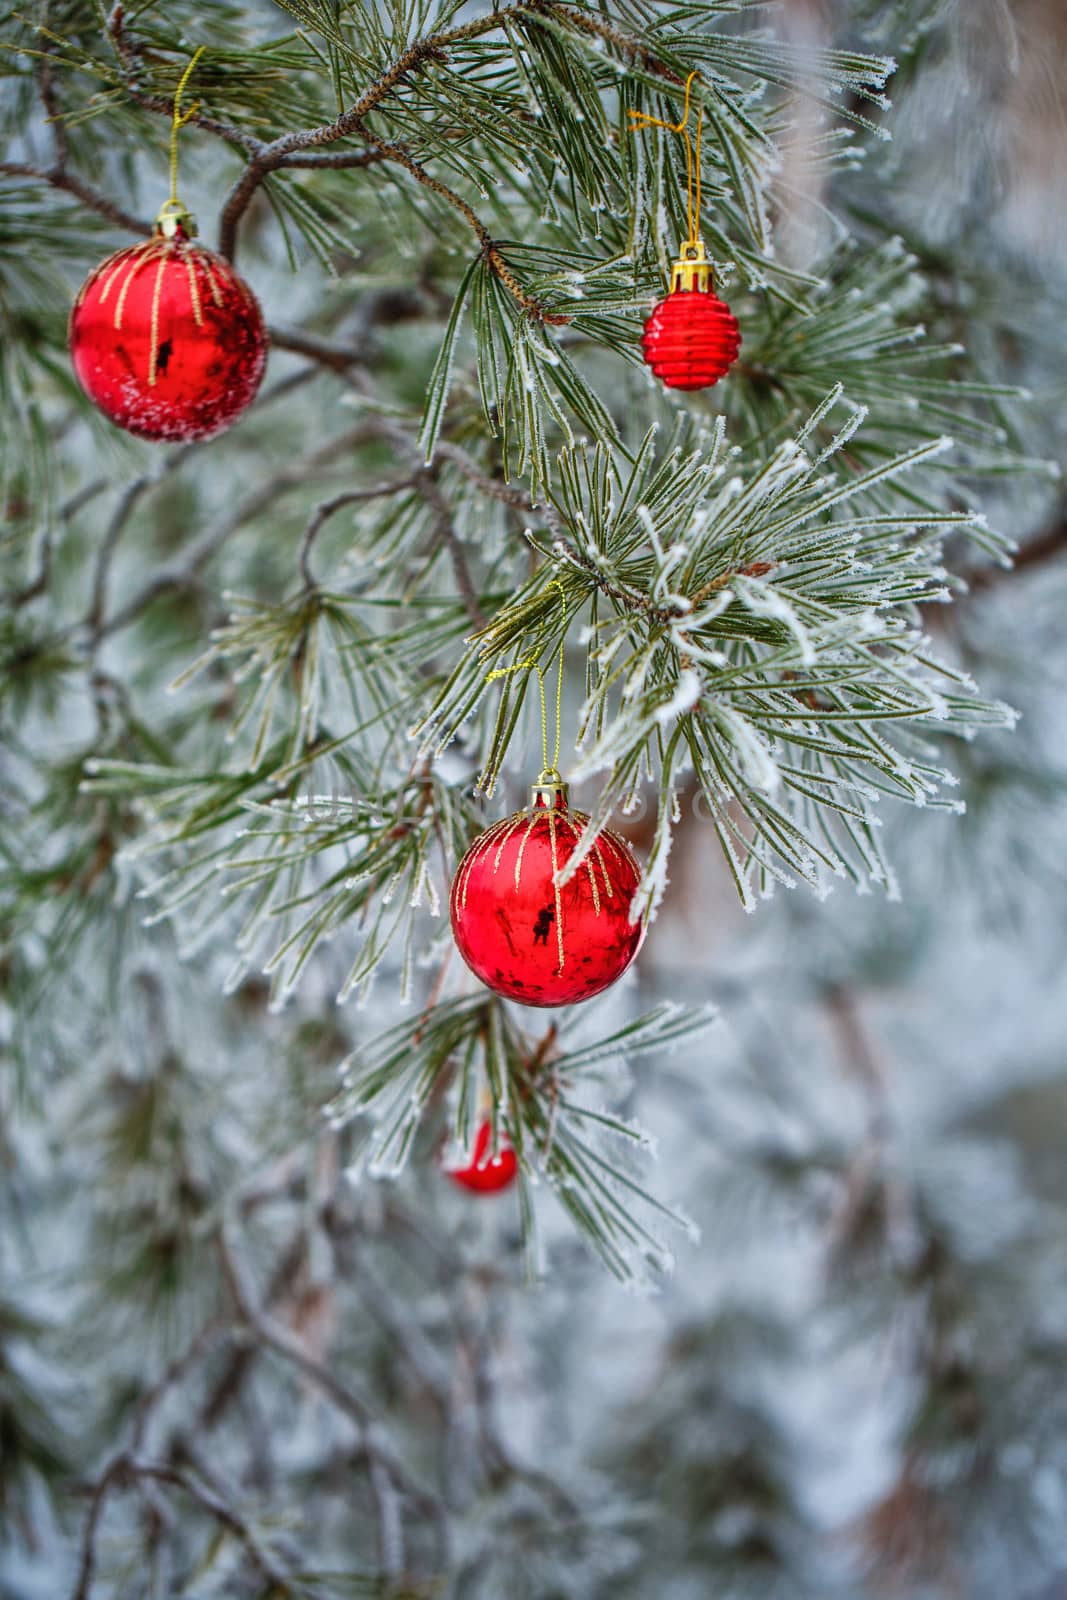 Red Christmas balls by Vagengeym